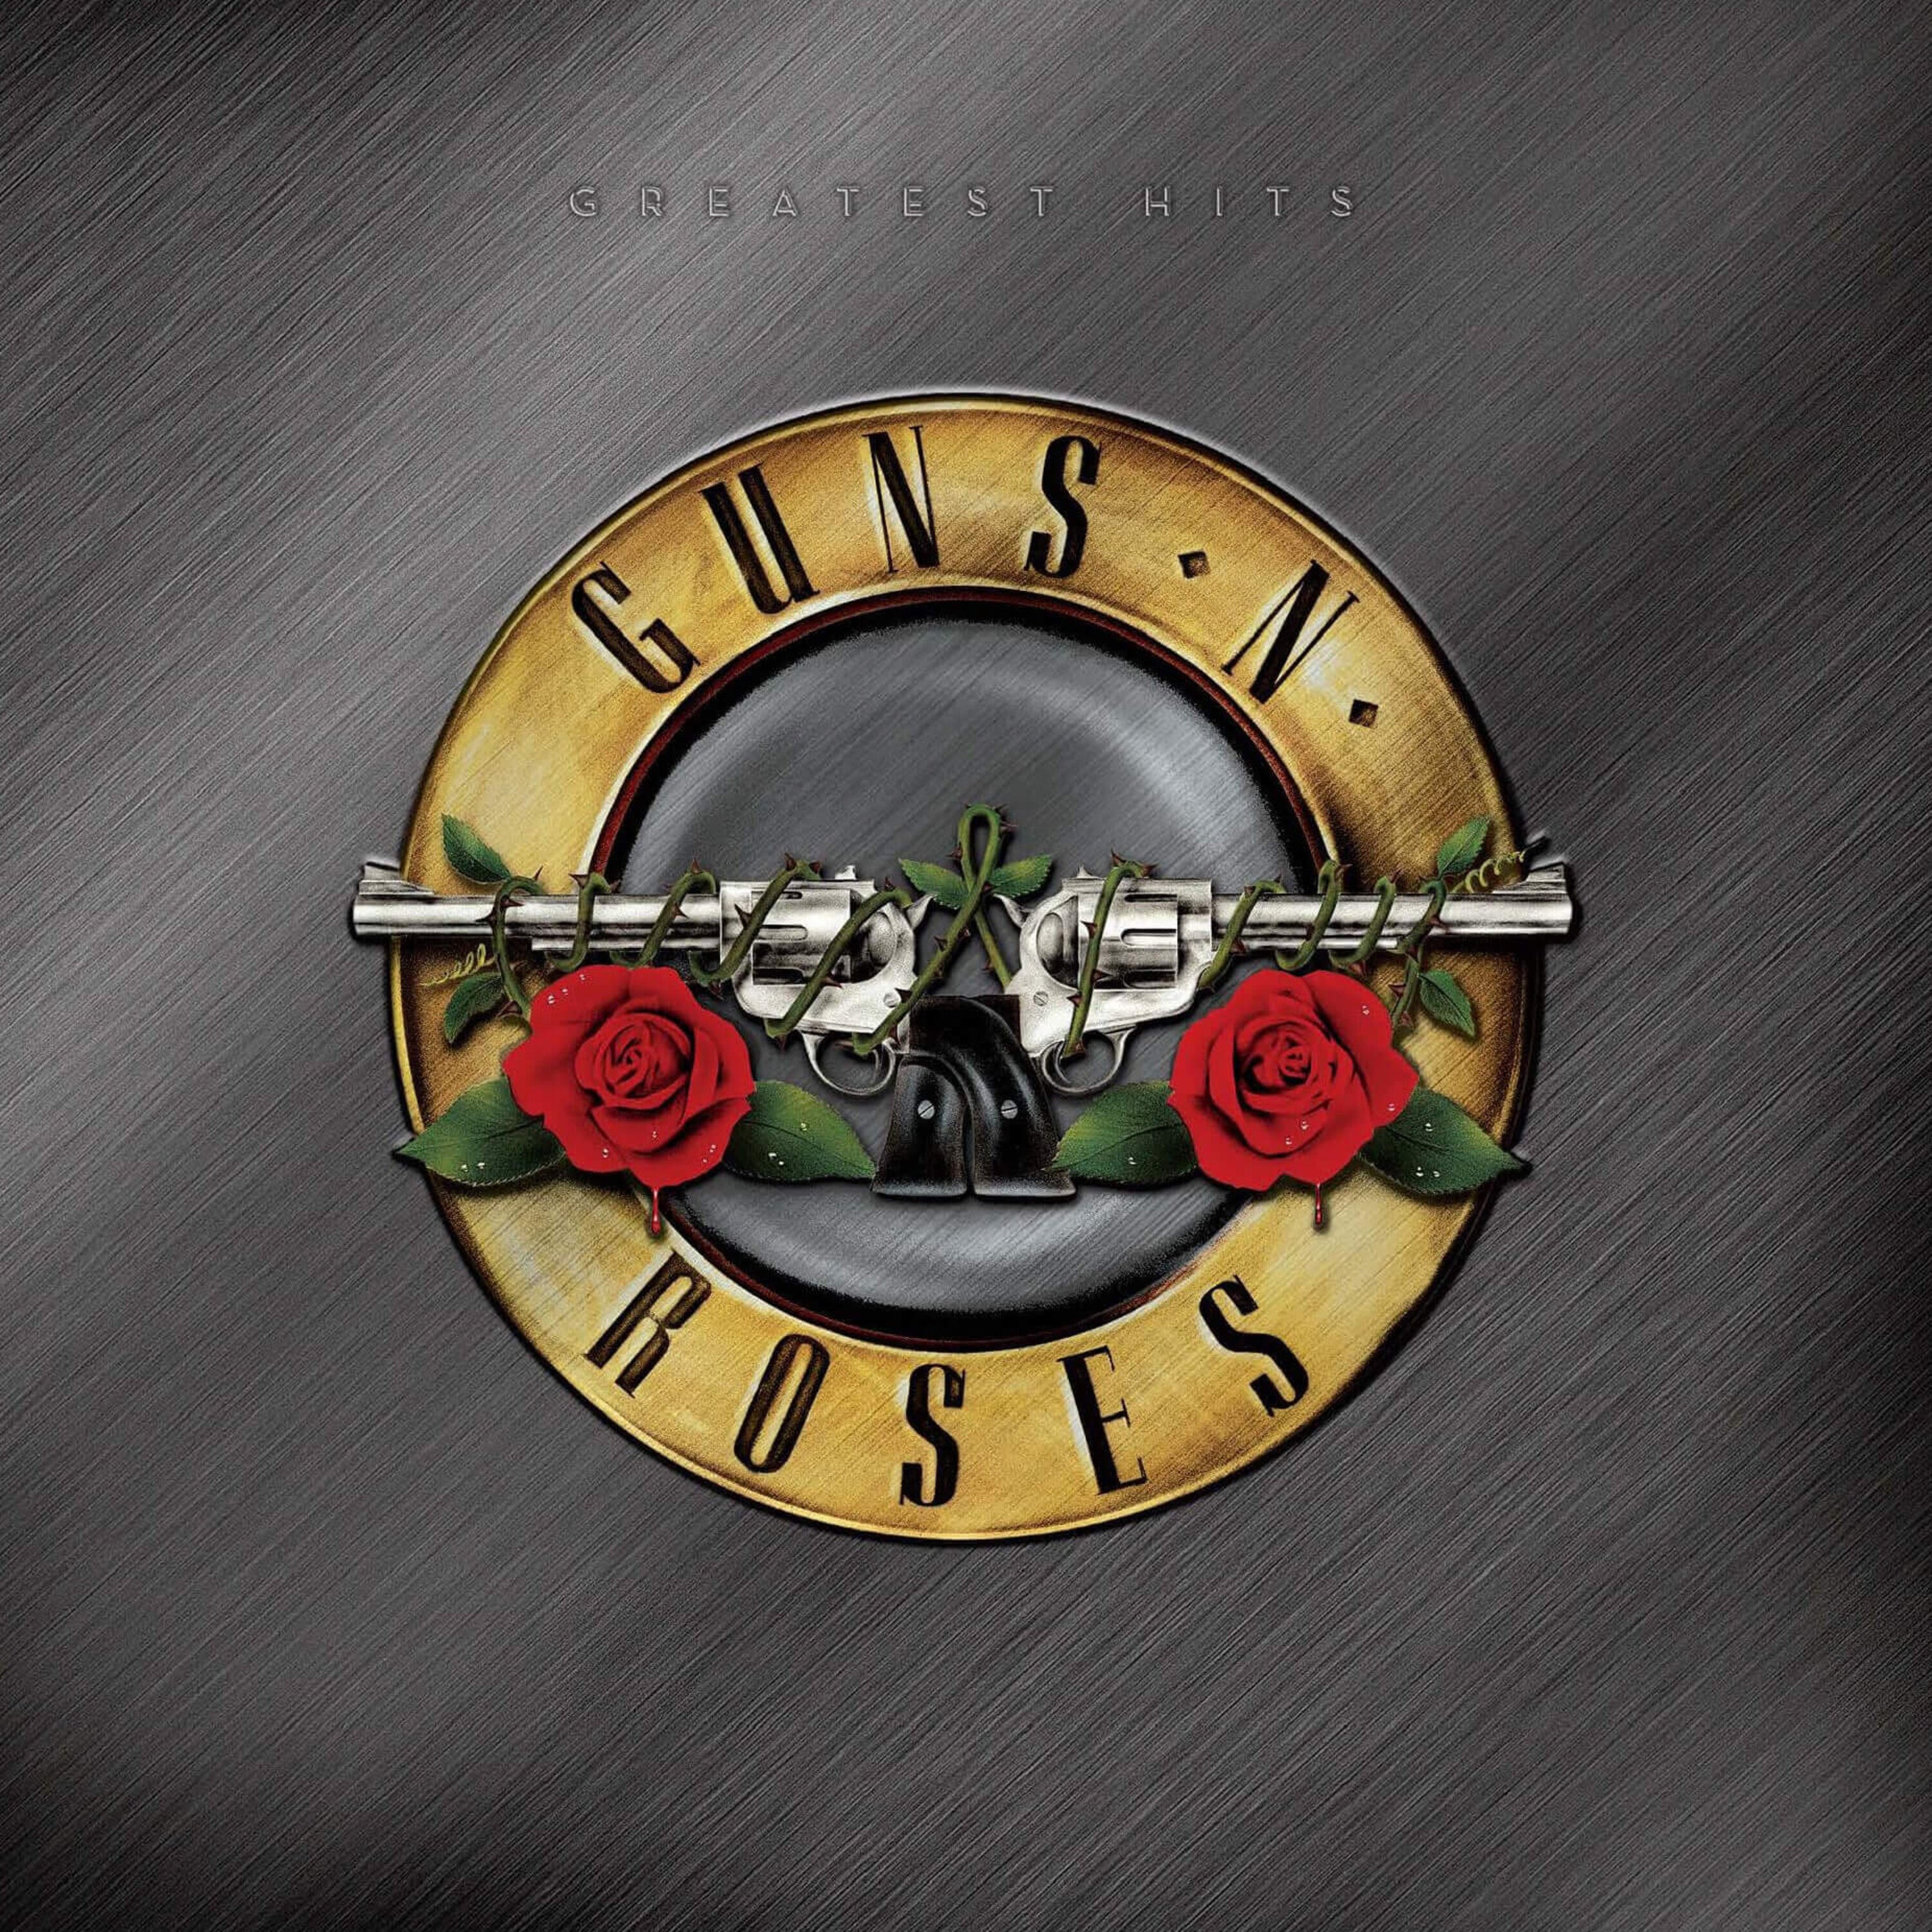 https://images.bravado.de/prod/product-assets/product-asset-data/guns-n-roses/guns-n-roses/products/134031/web/296740/image-thumb__296740__3000x3000_original/Guns-N-Roses-Greatest-Hits-2LP-Vinyl-134031-296740.jpg